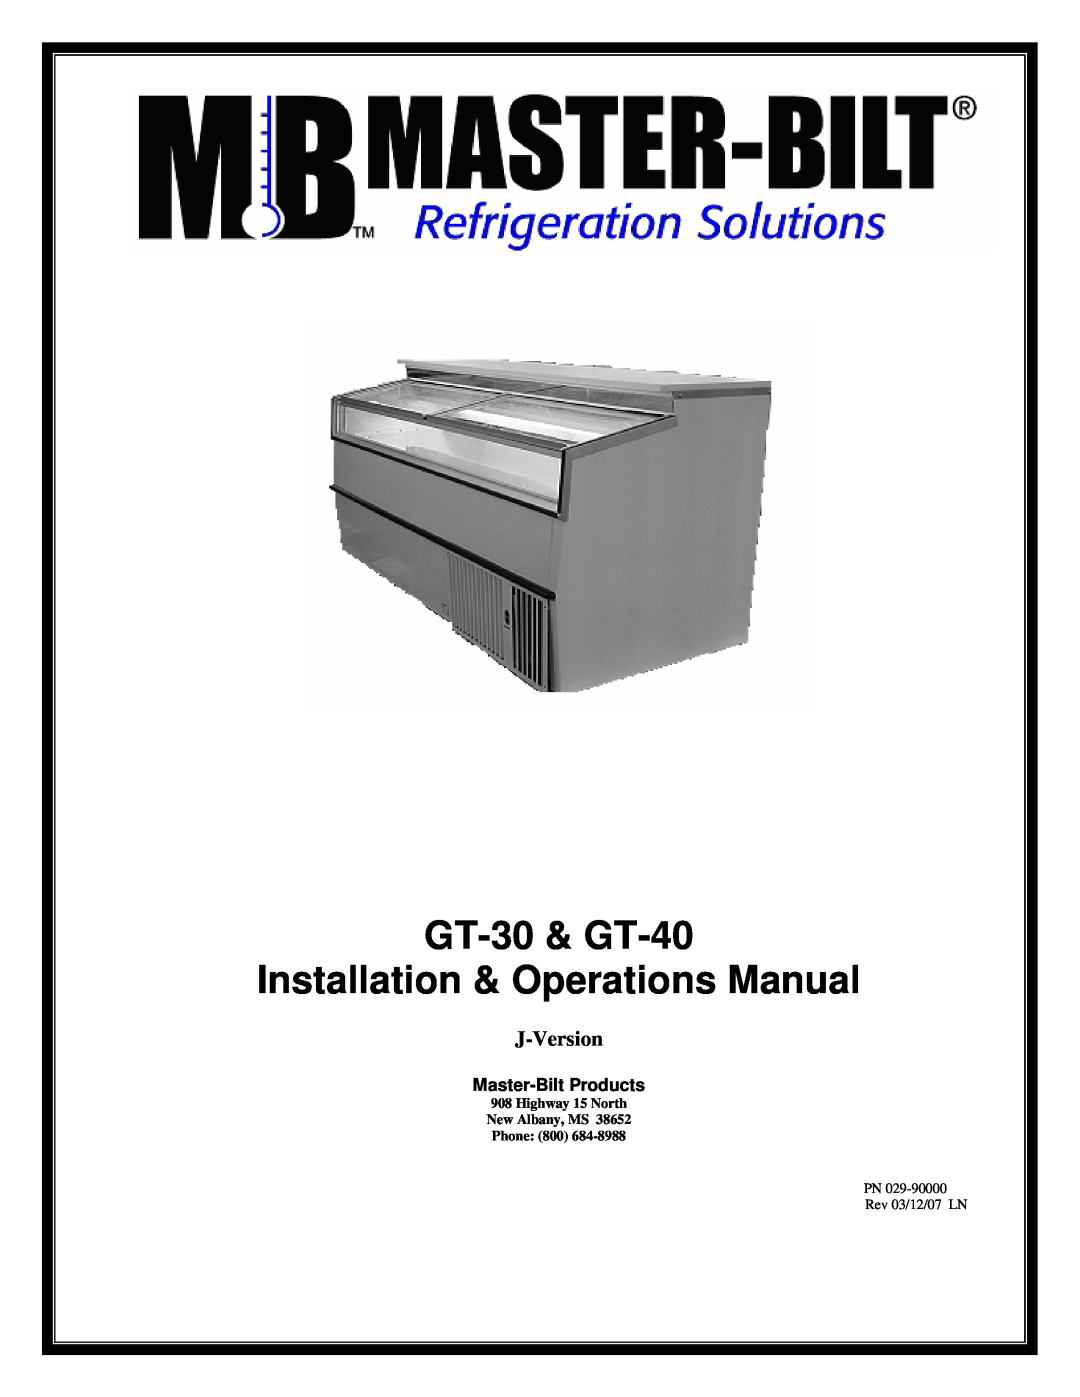 Master Bilt manual J-Version, GT-30& GT-40 Installation & Operations Manual, Highway 15 North New Albany, MS Phone 